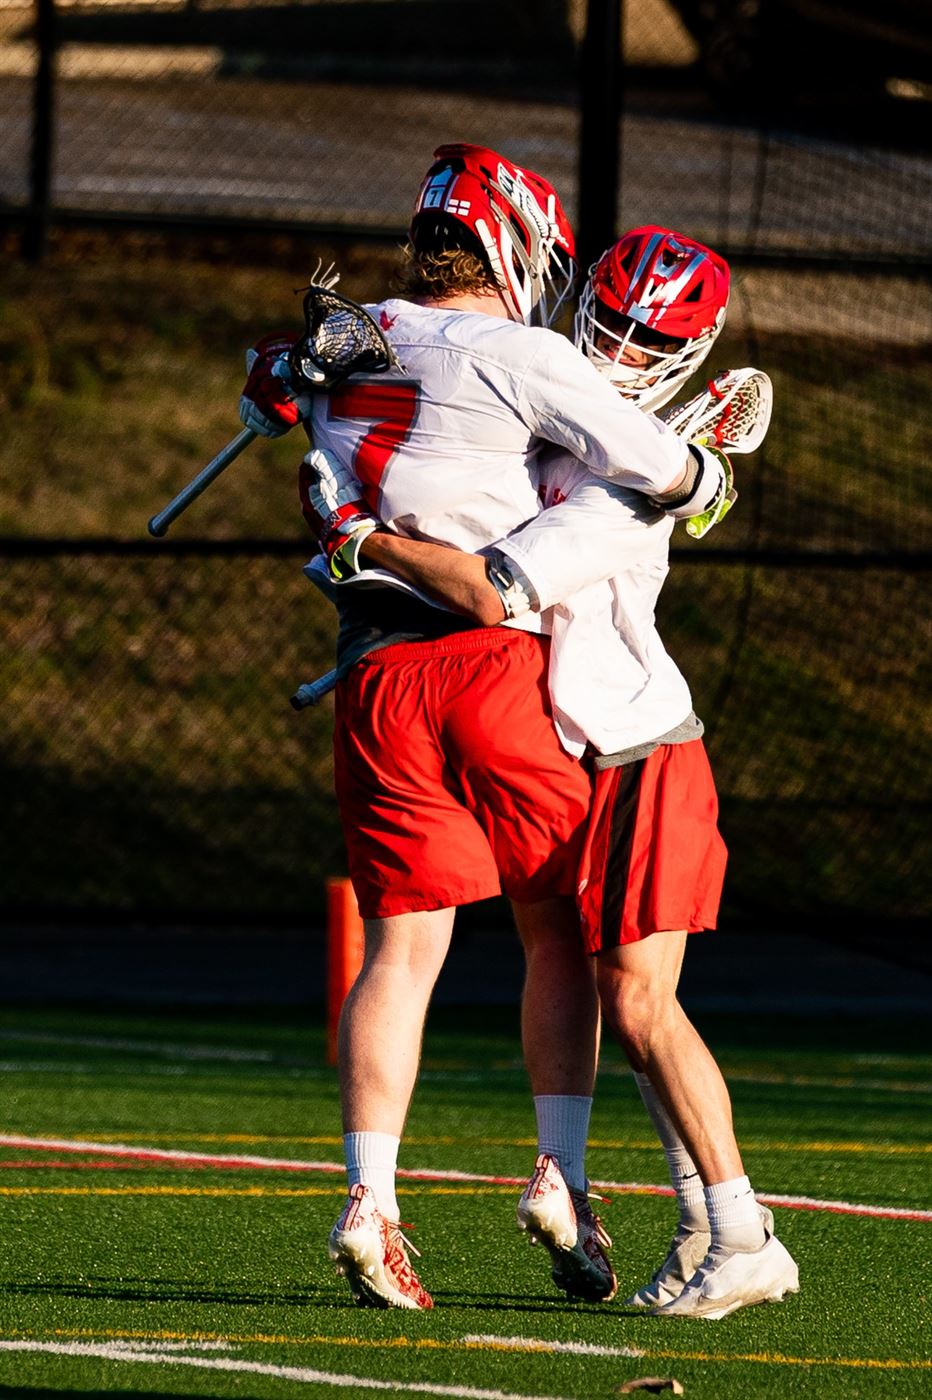 Boyle hugs his teammate after a goal scored. Chris Krusberg | The Montclarion